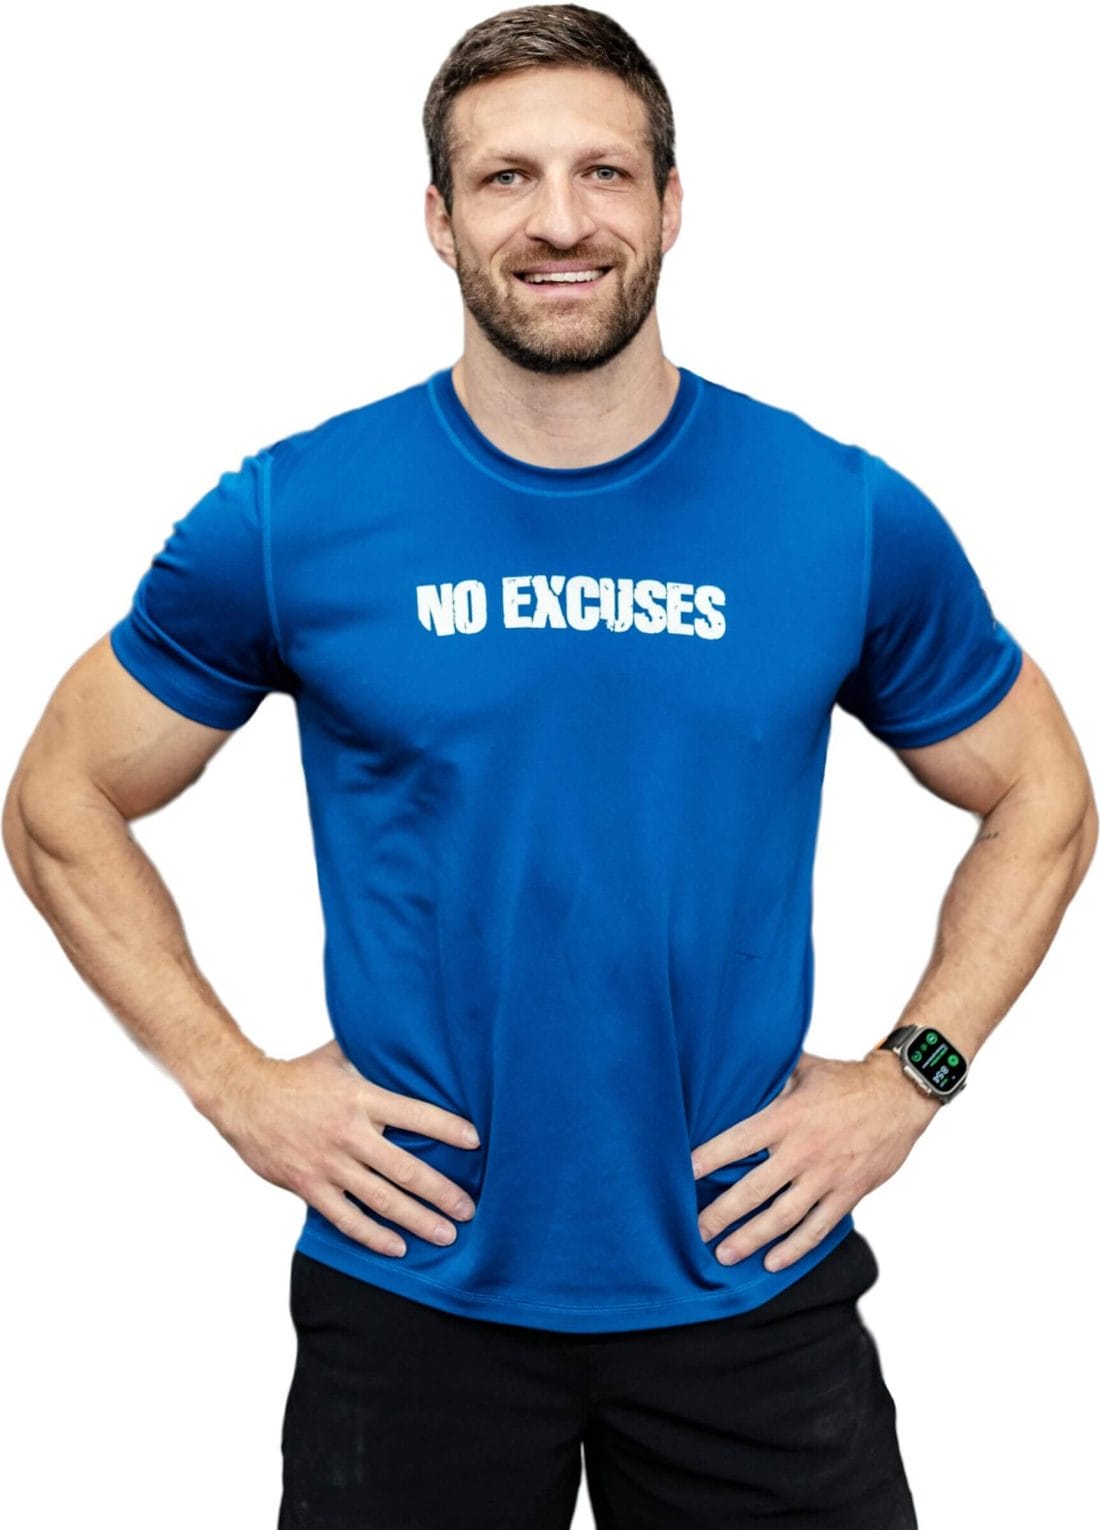 Michael Kummer with No Excuses Shirt